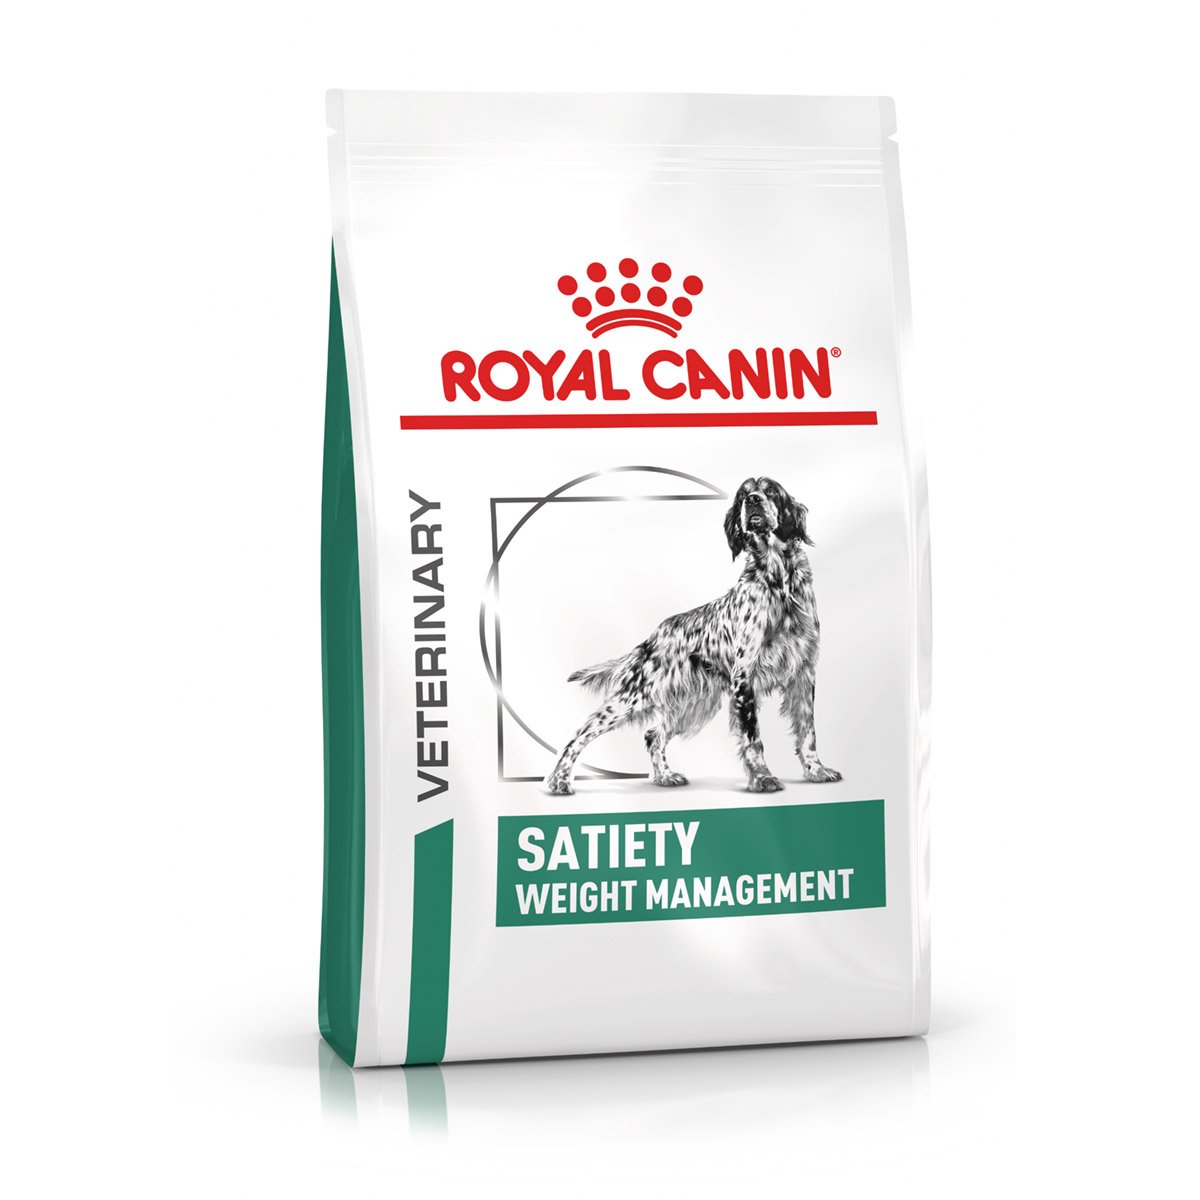 ROYAL CANIN® Veterinary SATIETY WEIGHT MANAGEMENT Trockenfutter für Hunde 12kg von Royal Canin